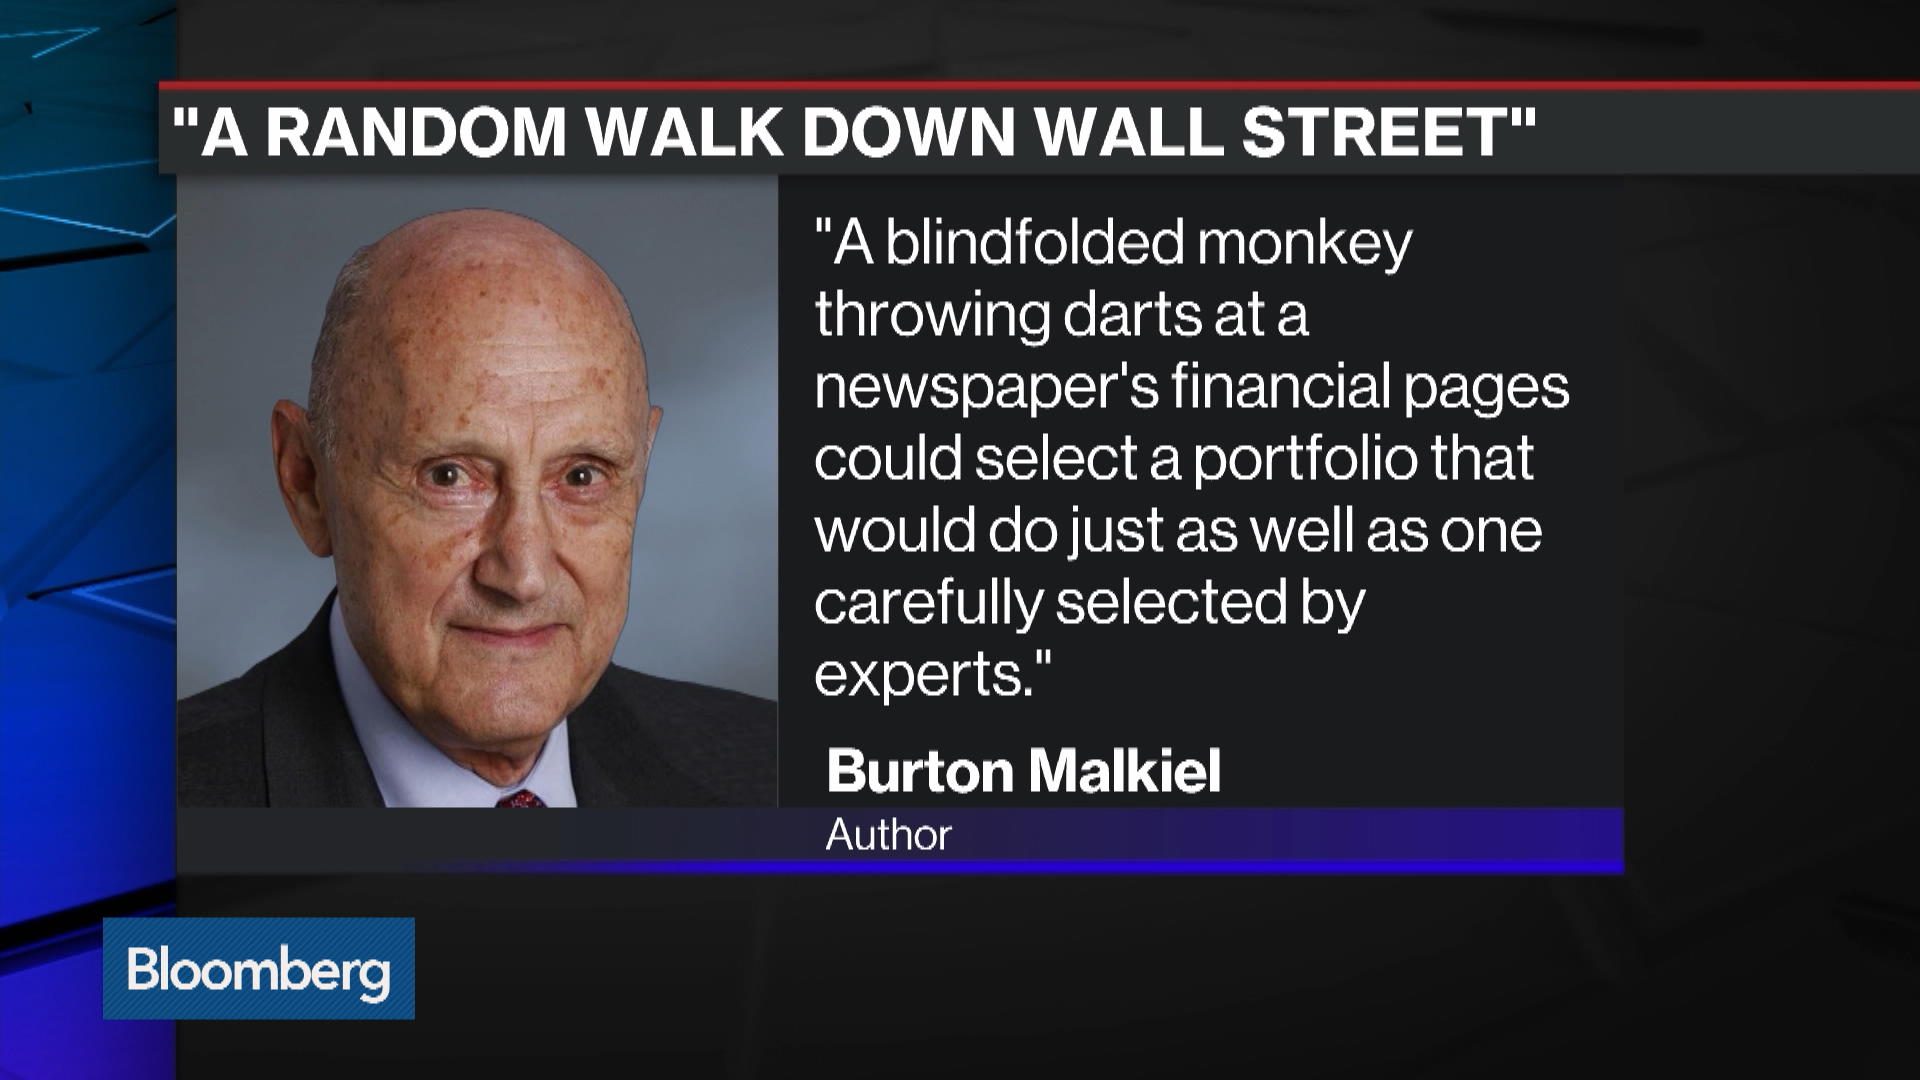 A Random Walk Down Wall Street with Burton Malkiel